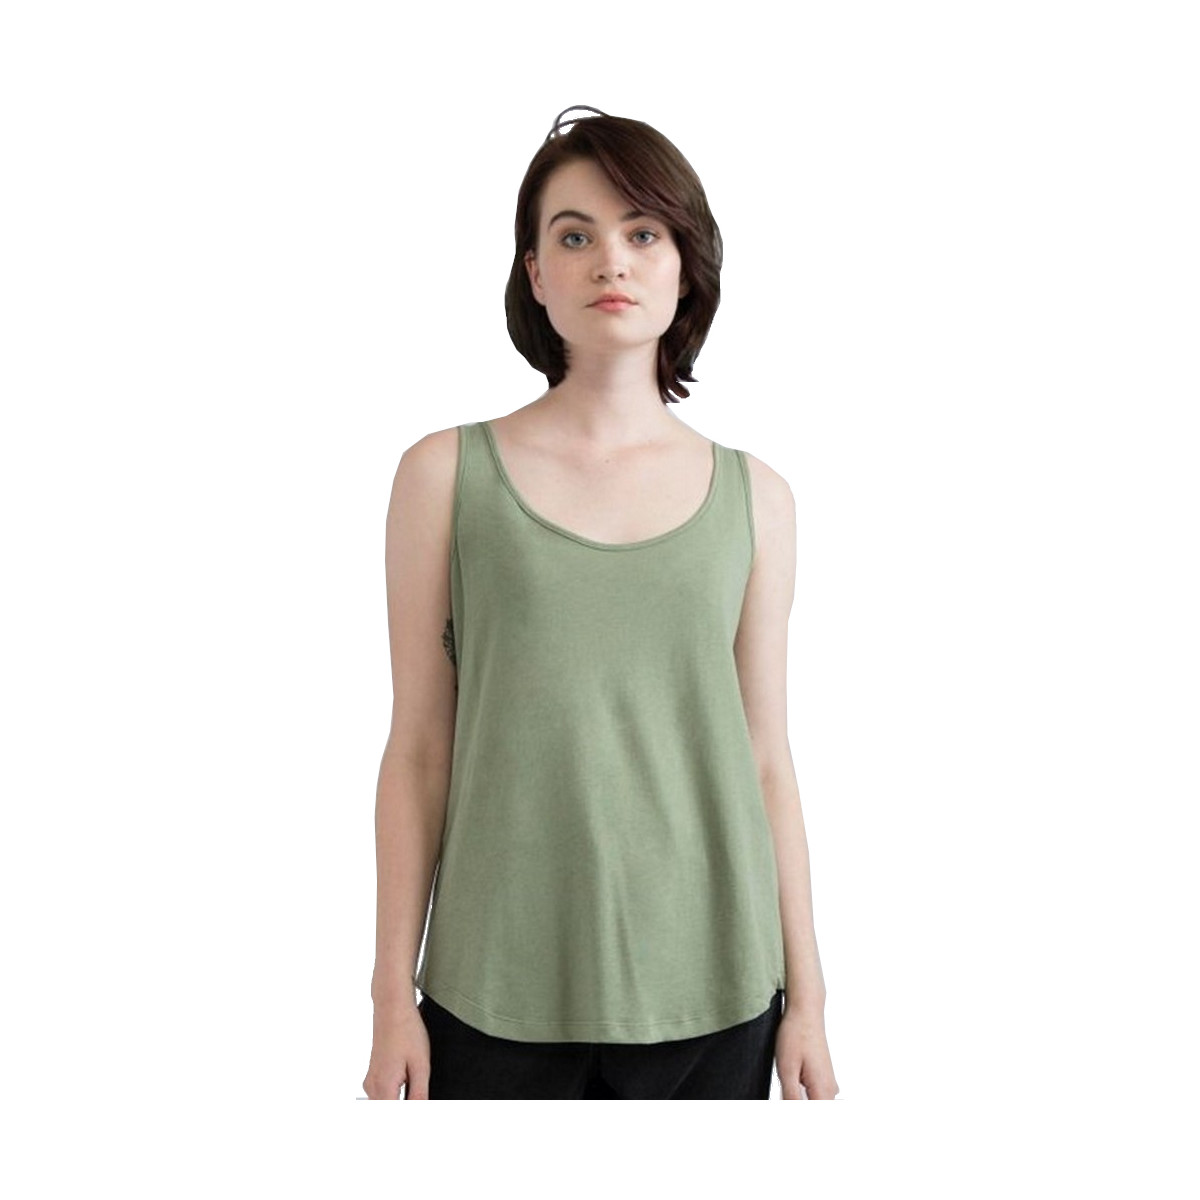 Abbigliamento Donna Top / T-shirt senza maniche Mantis M92 Verde